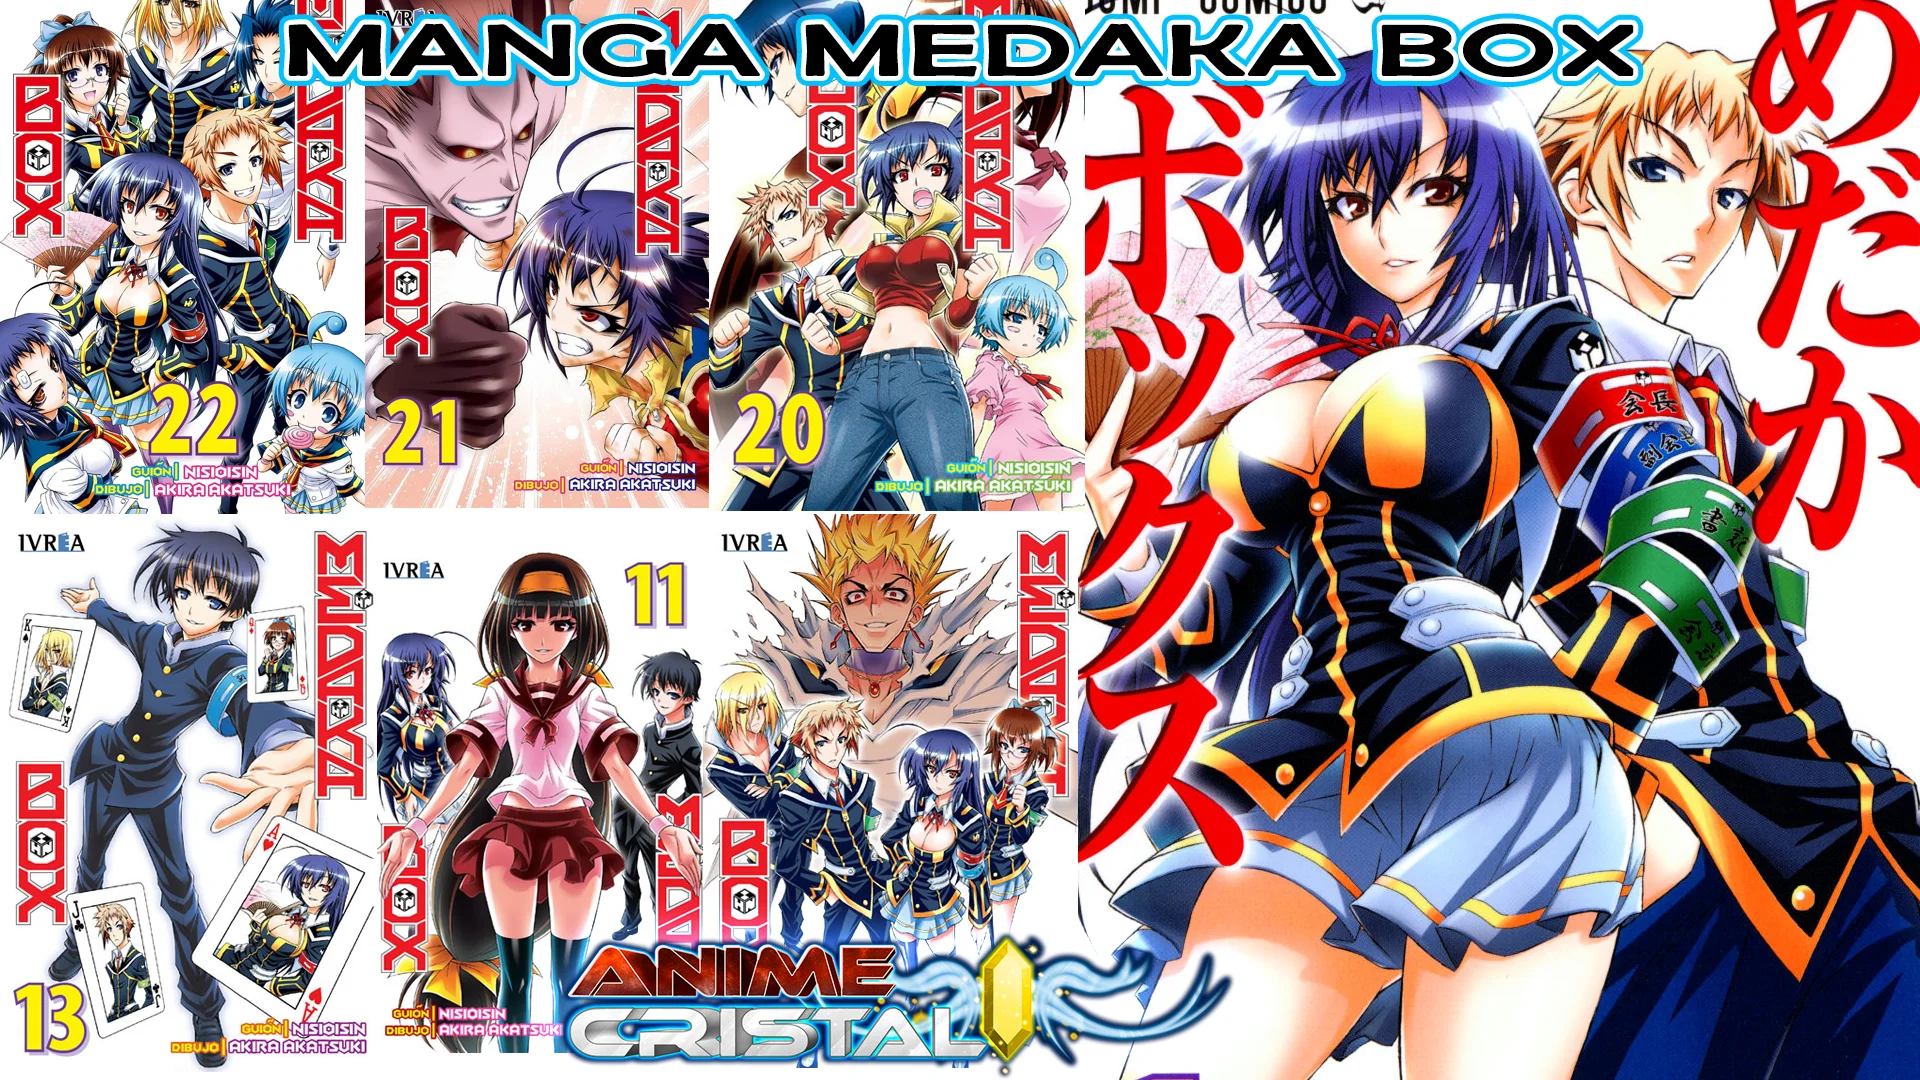 Manga Medaka Box